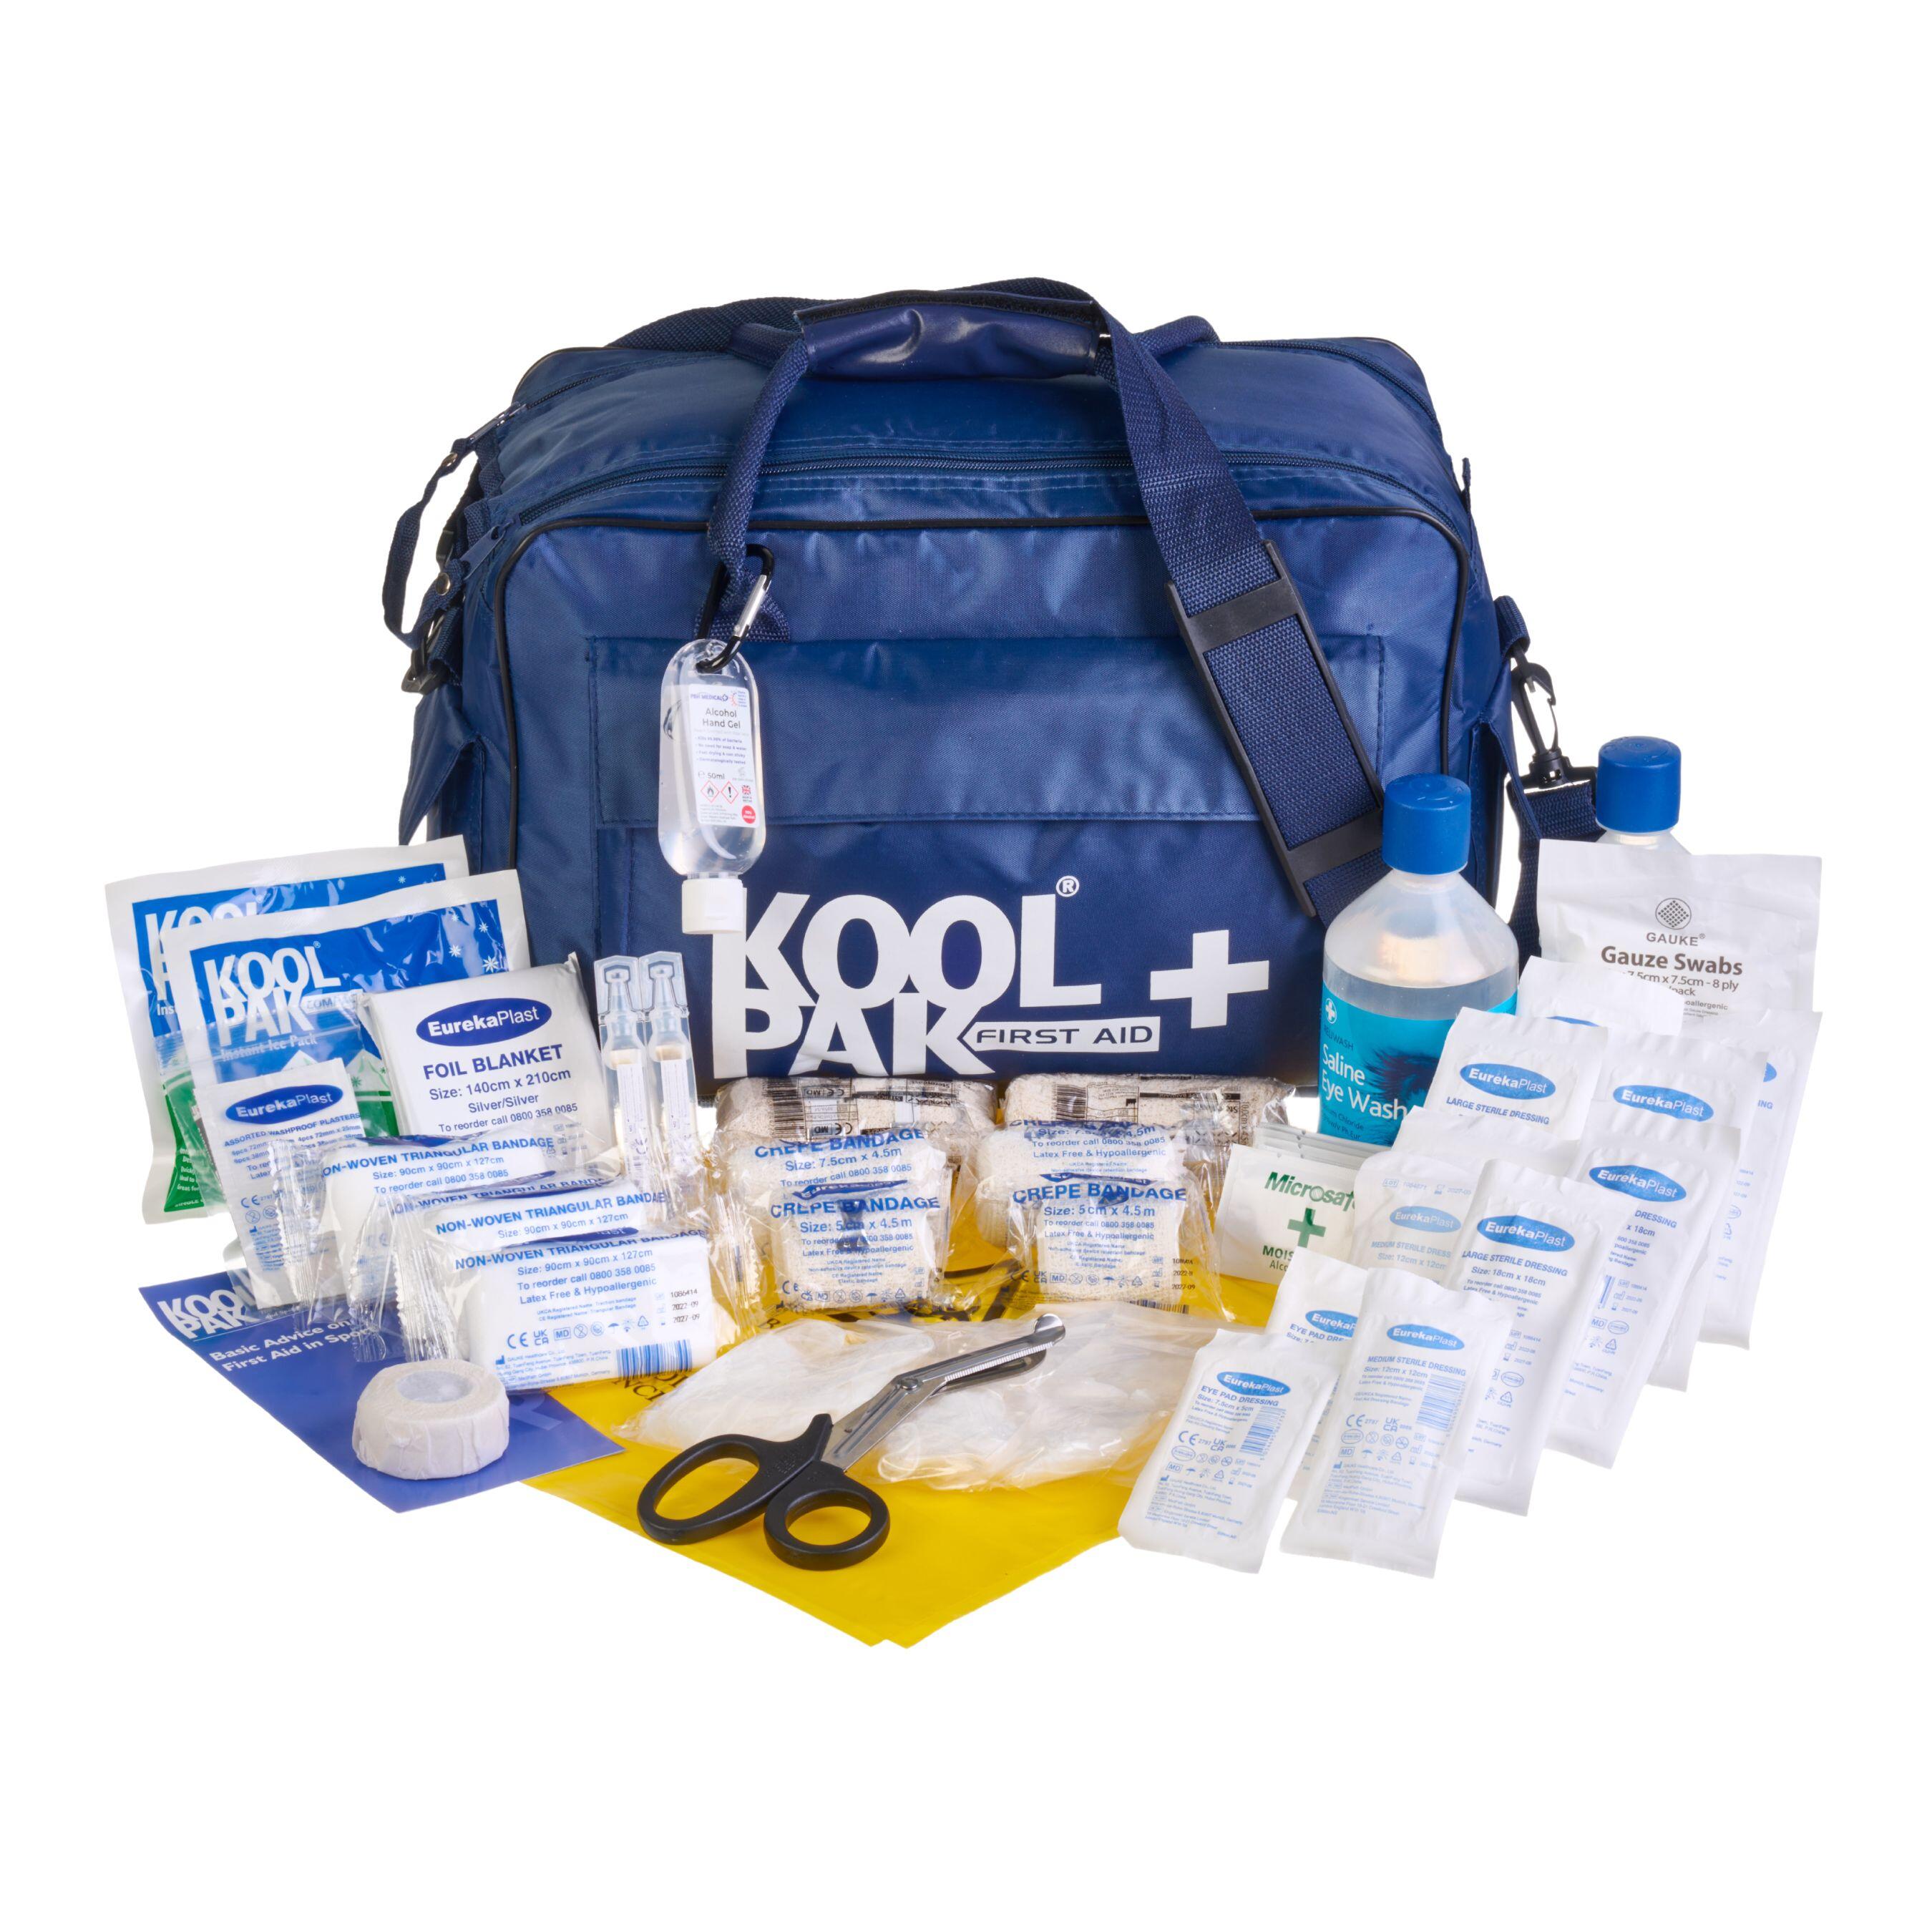 KOOLPAK KoolPak Team First Aid Kit Sports Injury Treatment